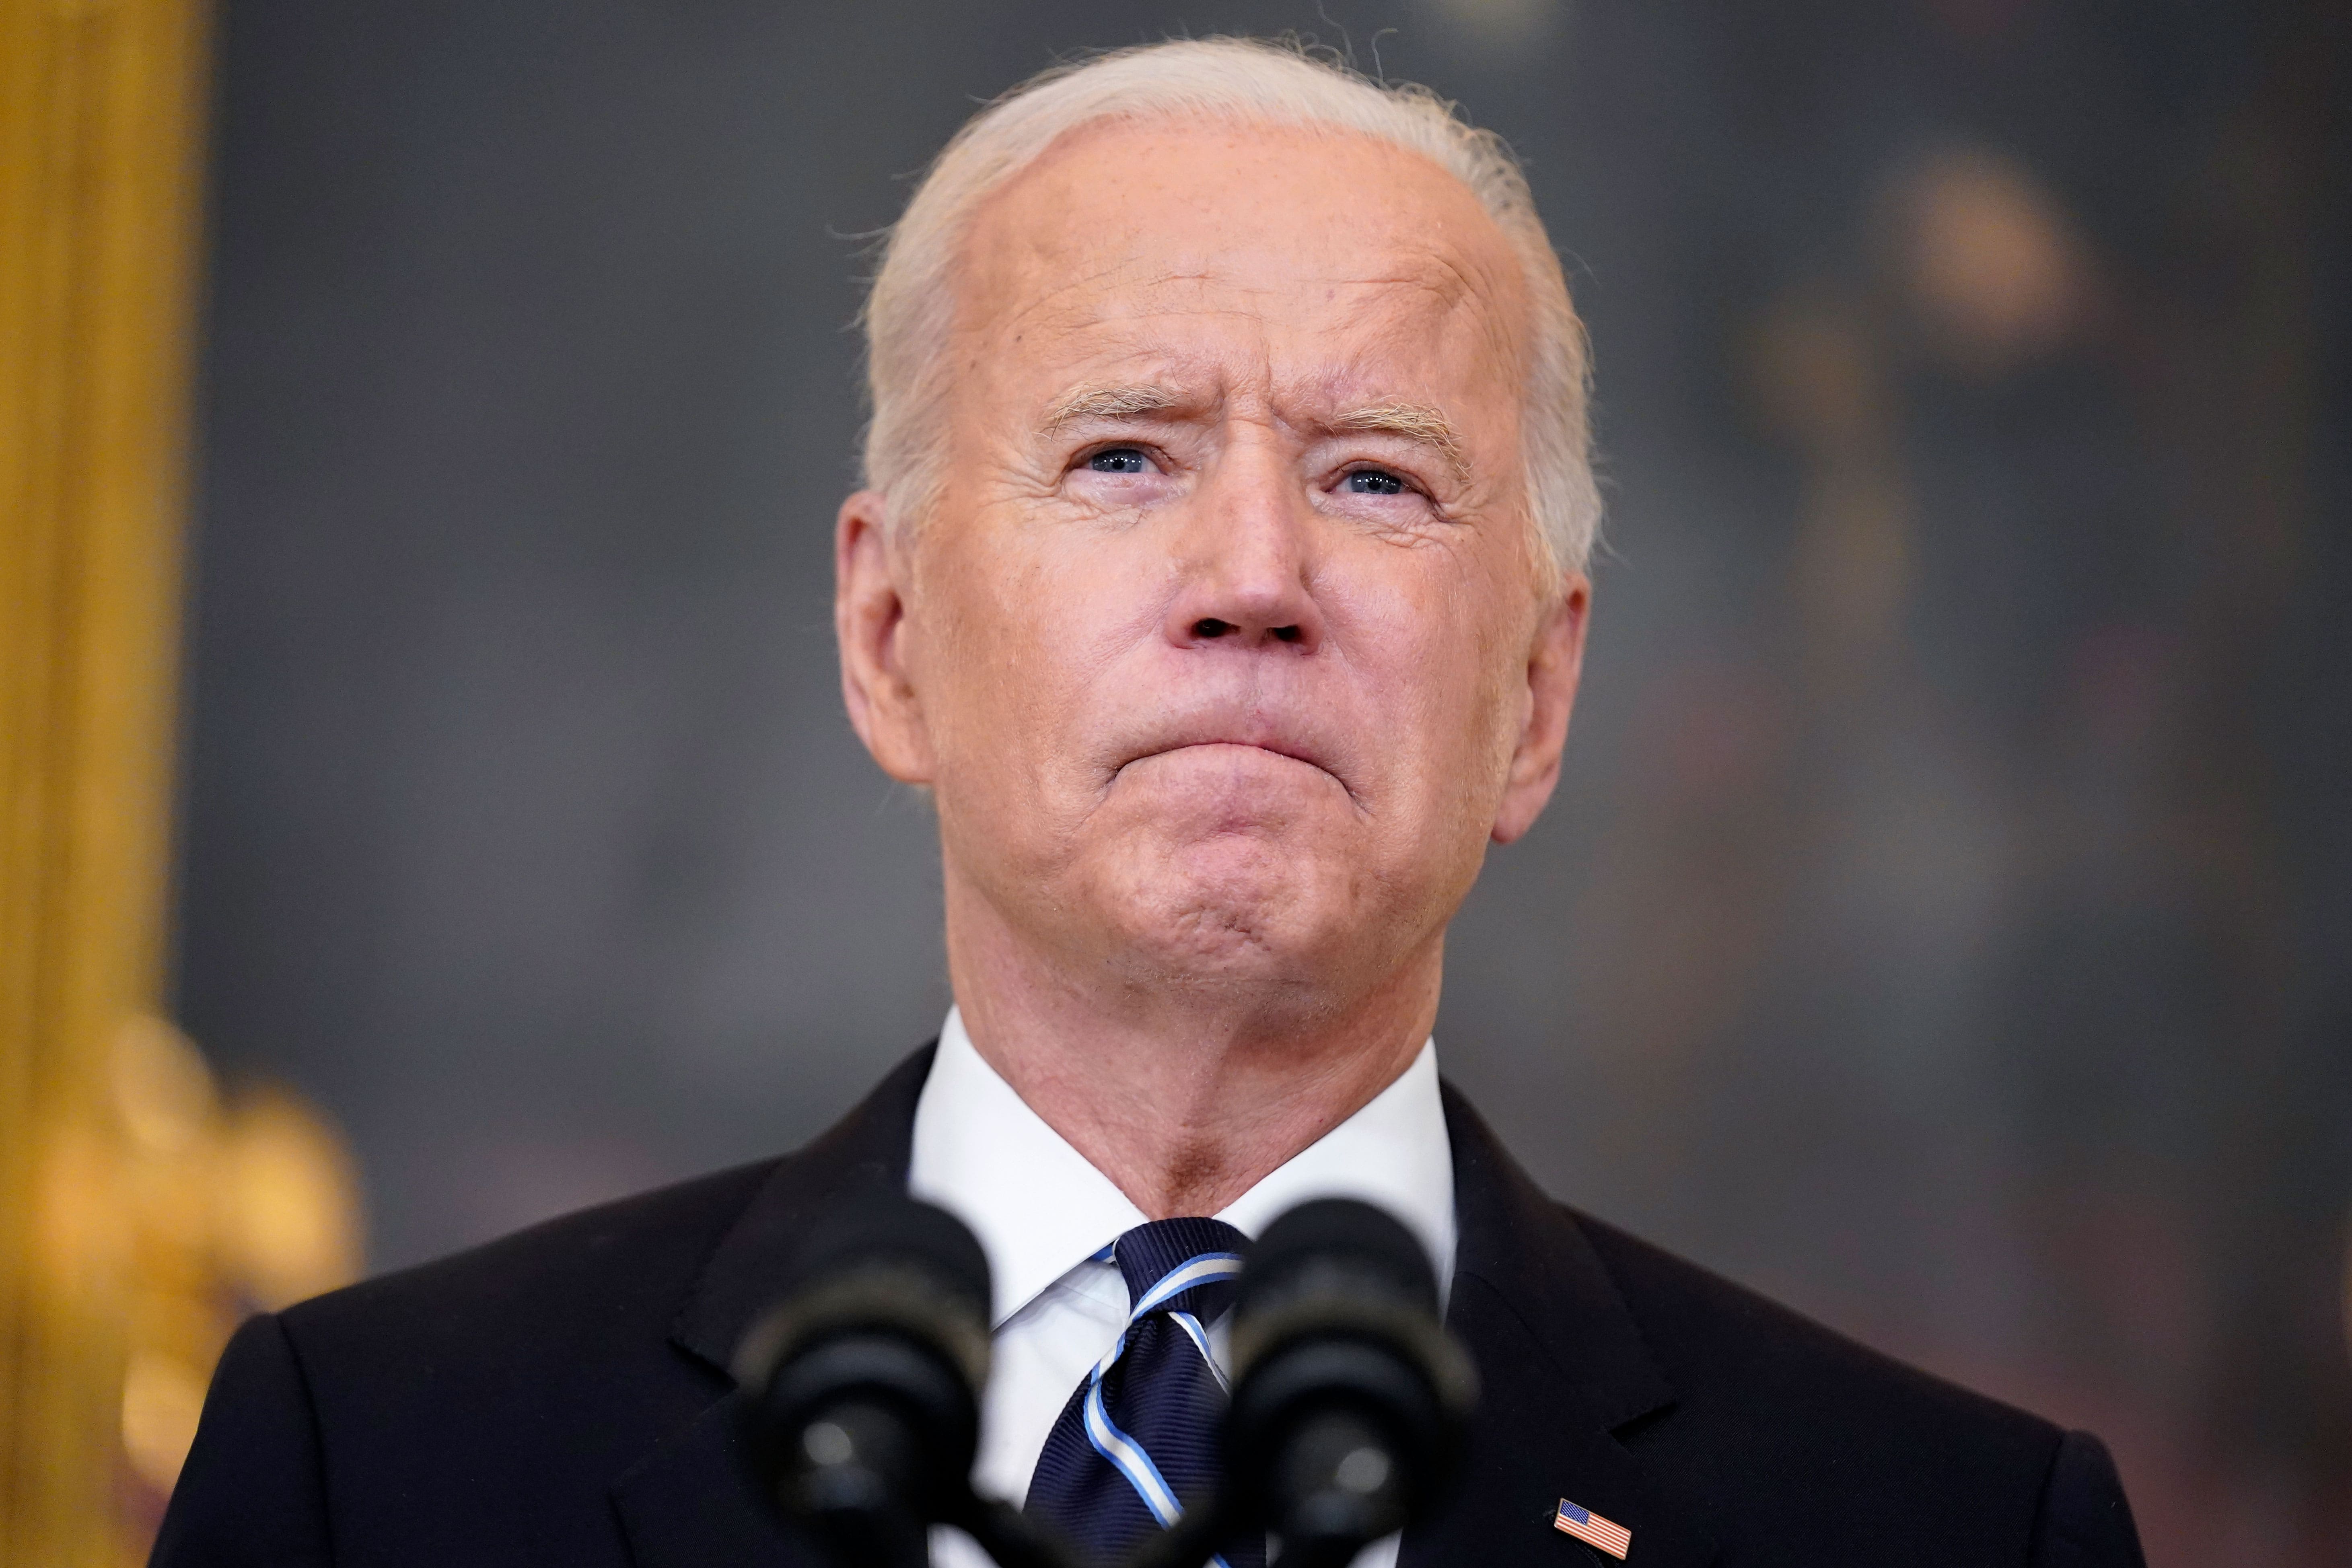 Democrats pressure Biden to move party positions closer